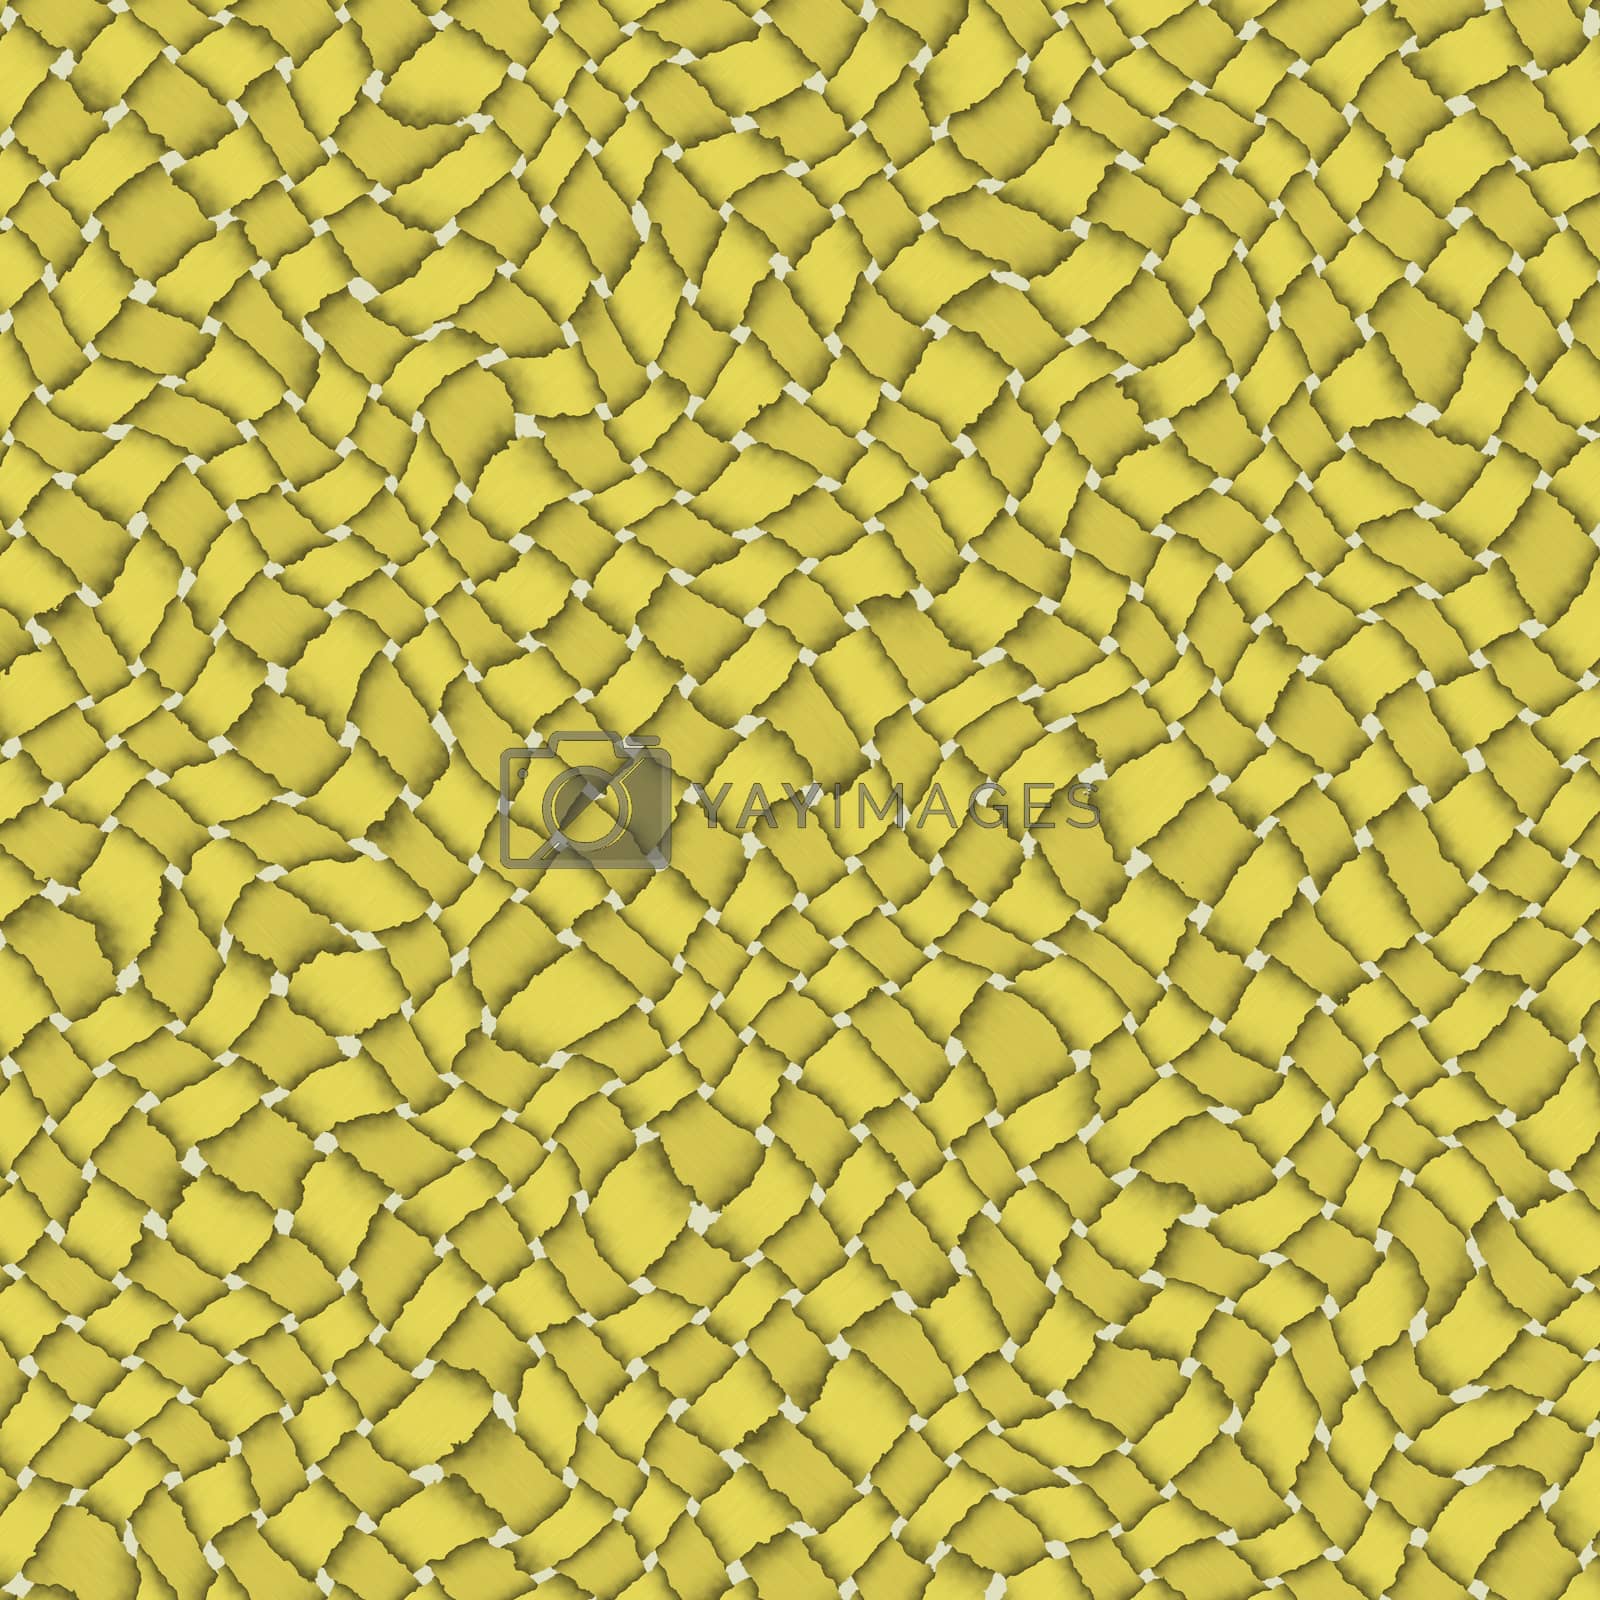 Royalty free image of weave pattern design by panuruangjan